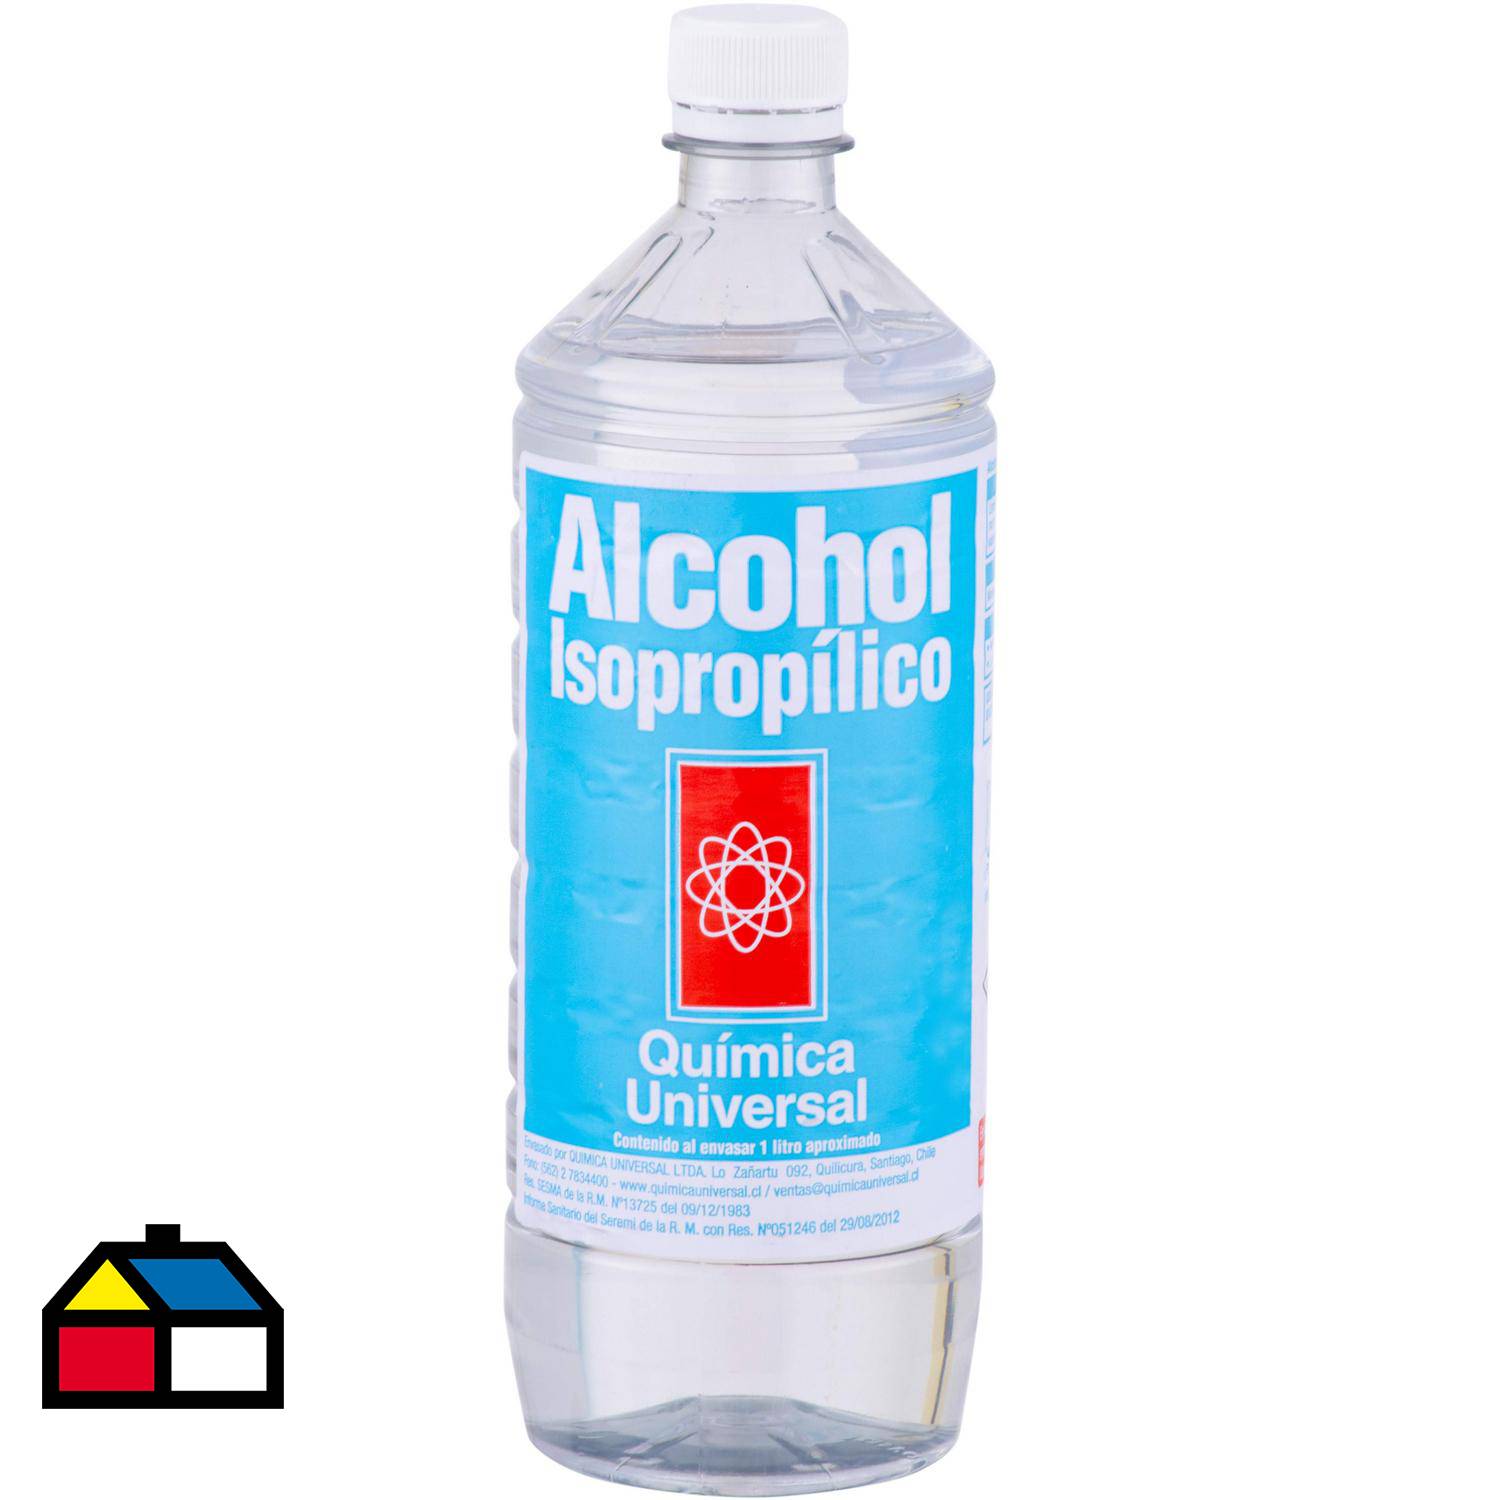 Alcohol isopropilico 1 lt